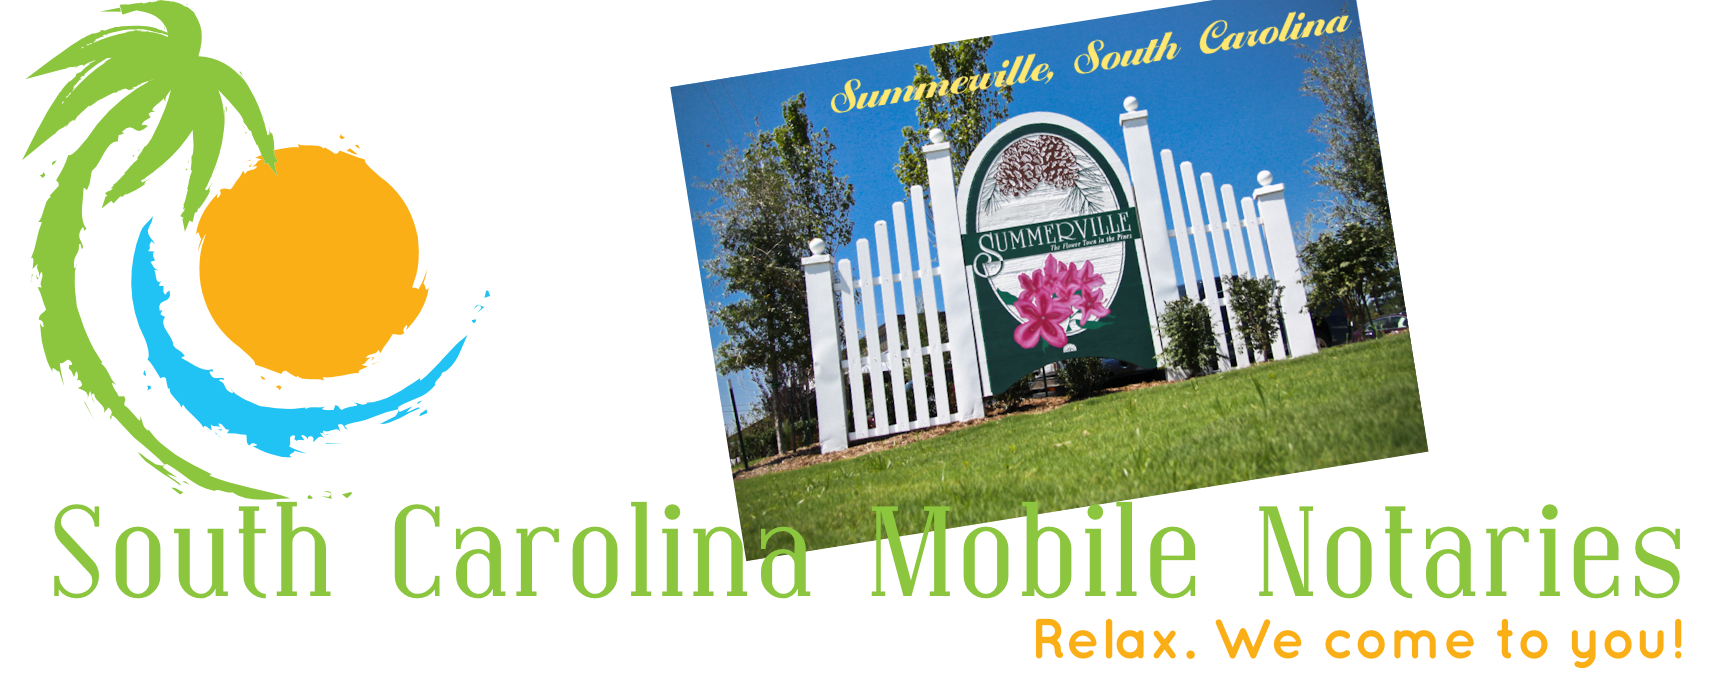 Summerville South Carolna Mobile Notaries; Summerville mobile notary service; traveling notary public Summerville; Summerville wedding officiants; signing agents Summerville, SC